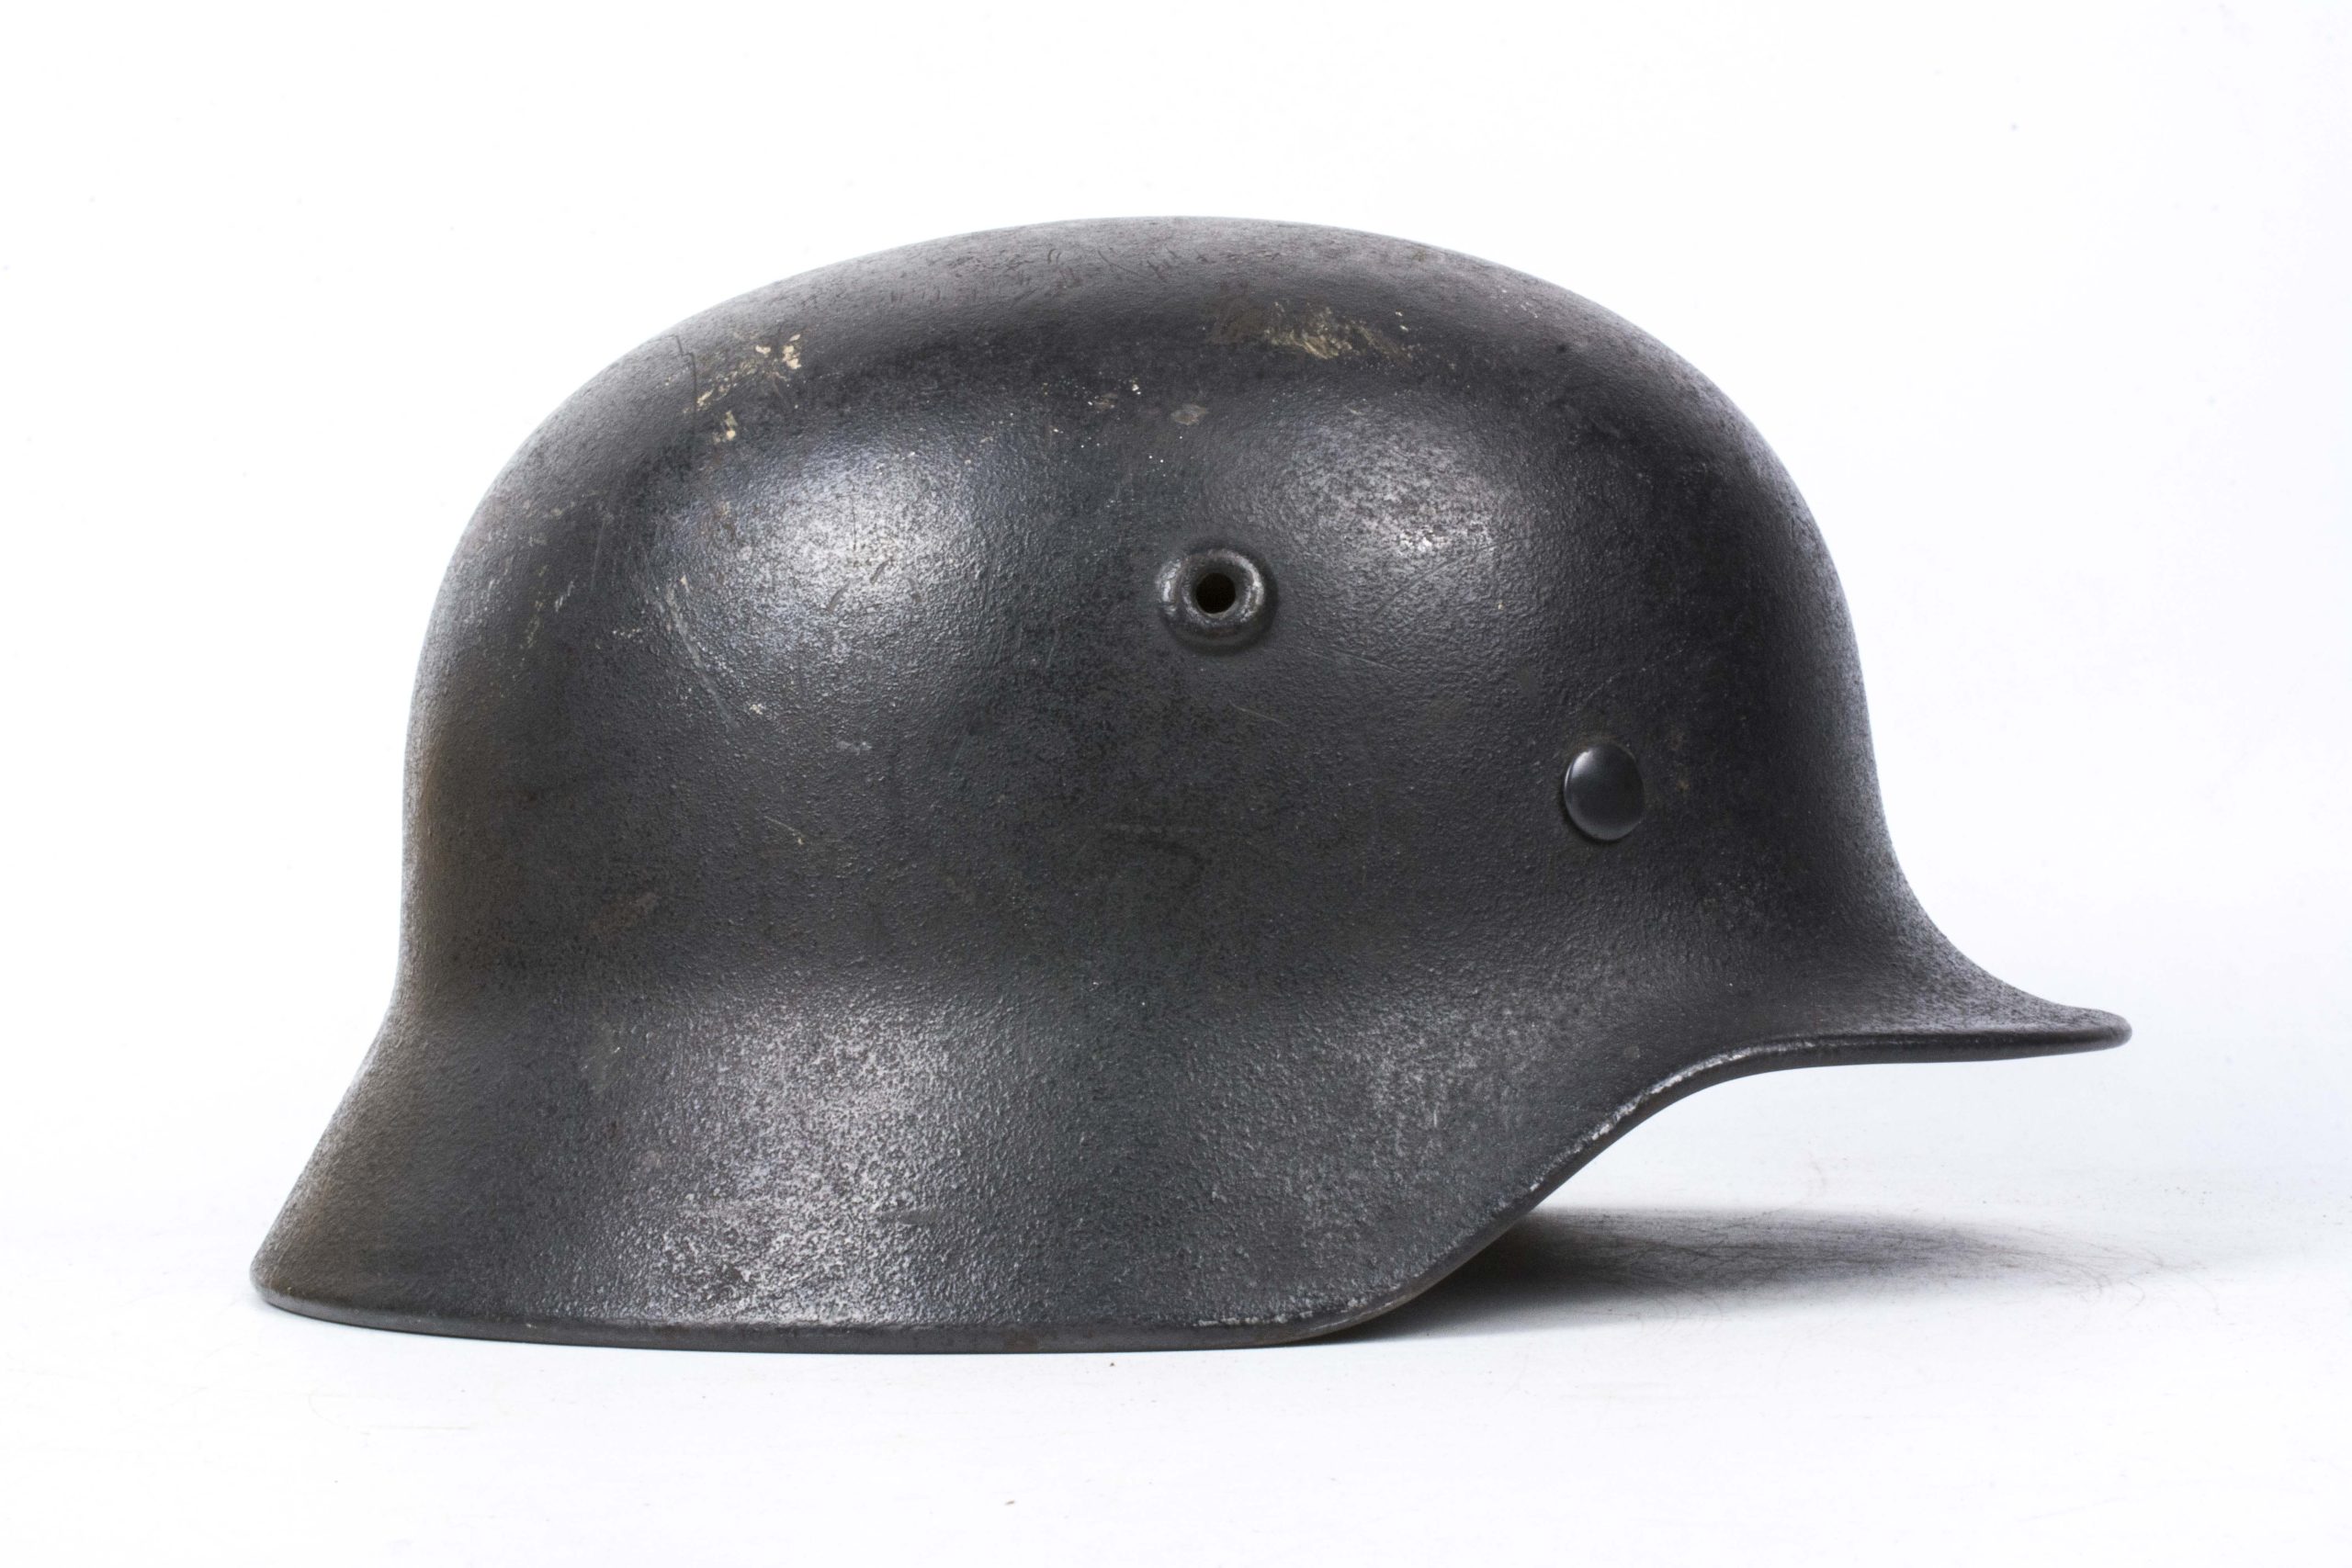 Single decal Luftwaffe m40 Camo steel helmet, Q66/7568